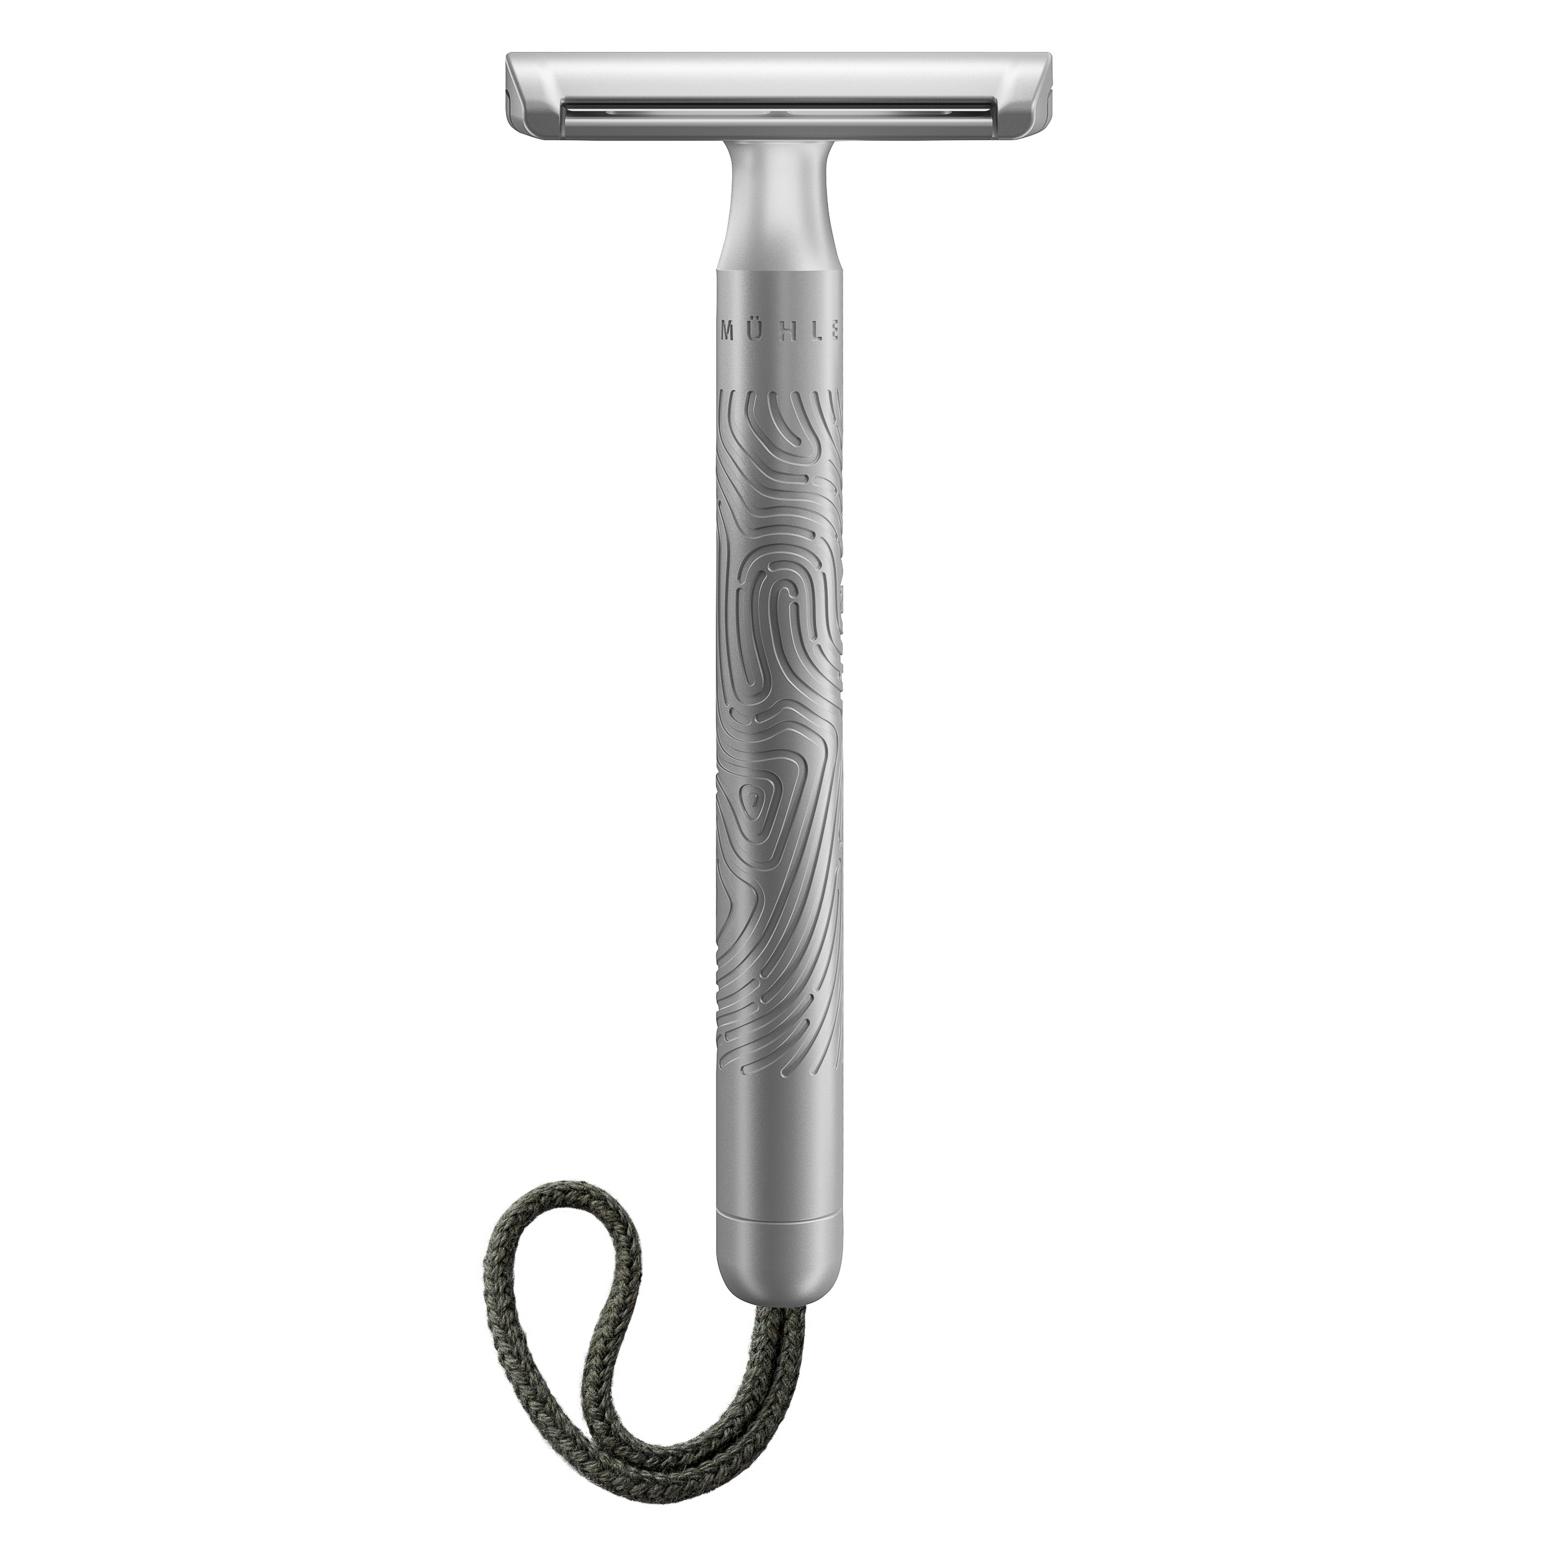 MUHLE Companion safety razor with stone colour cord